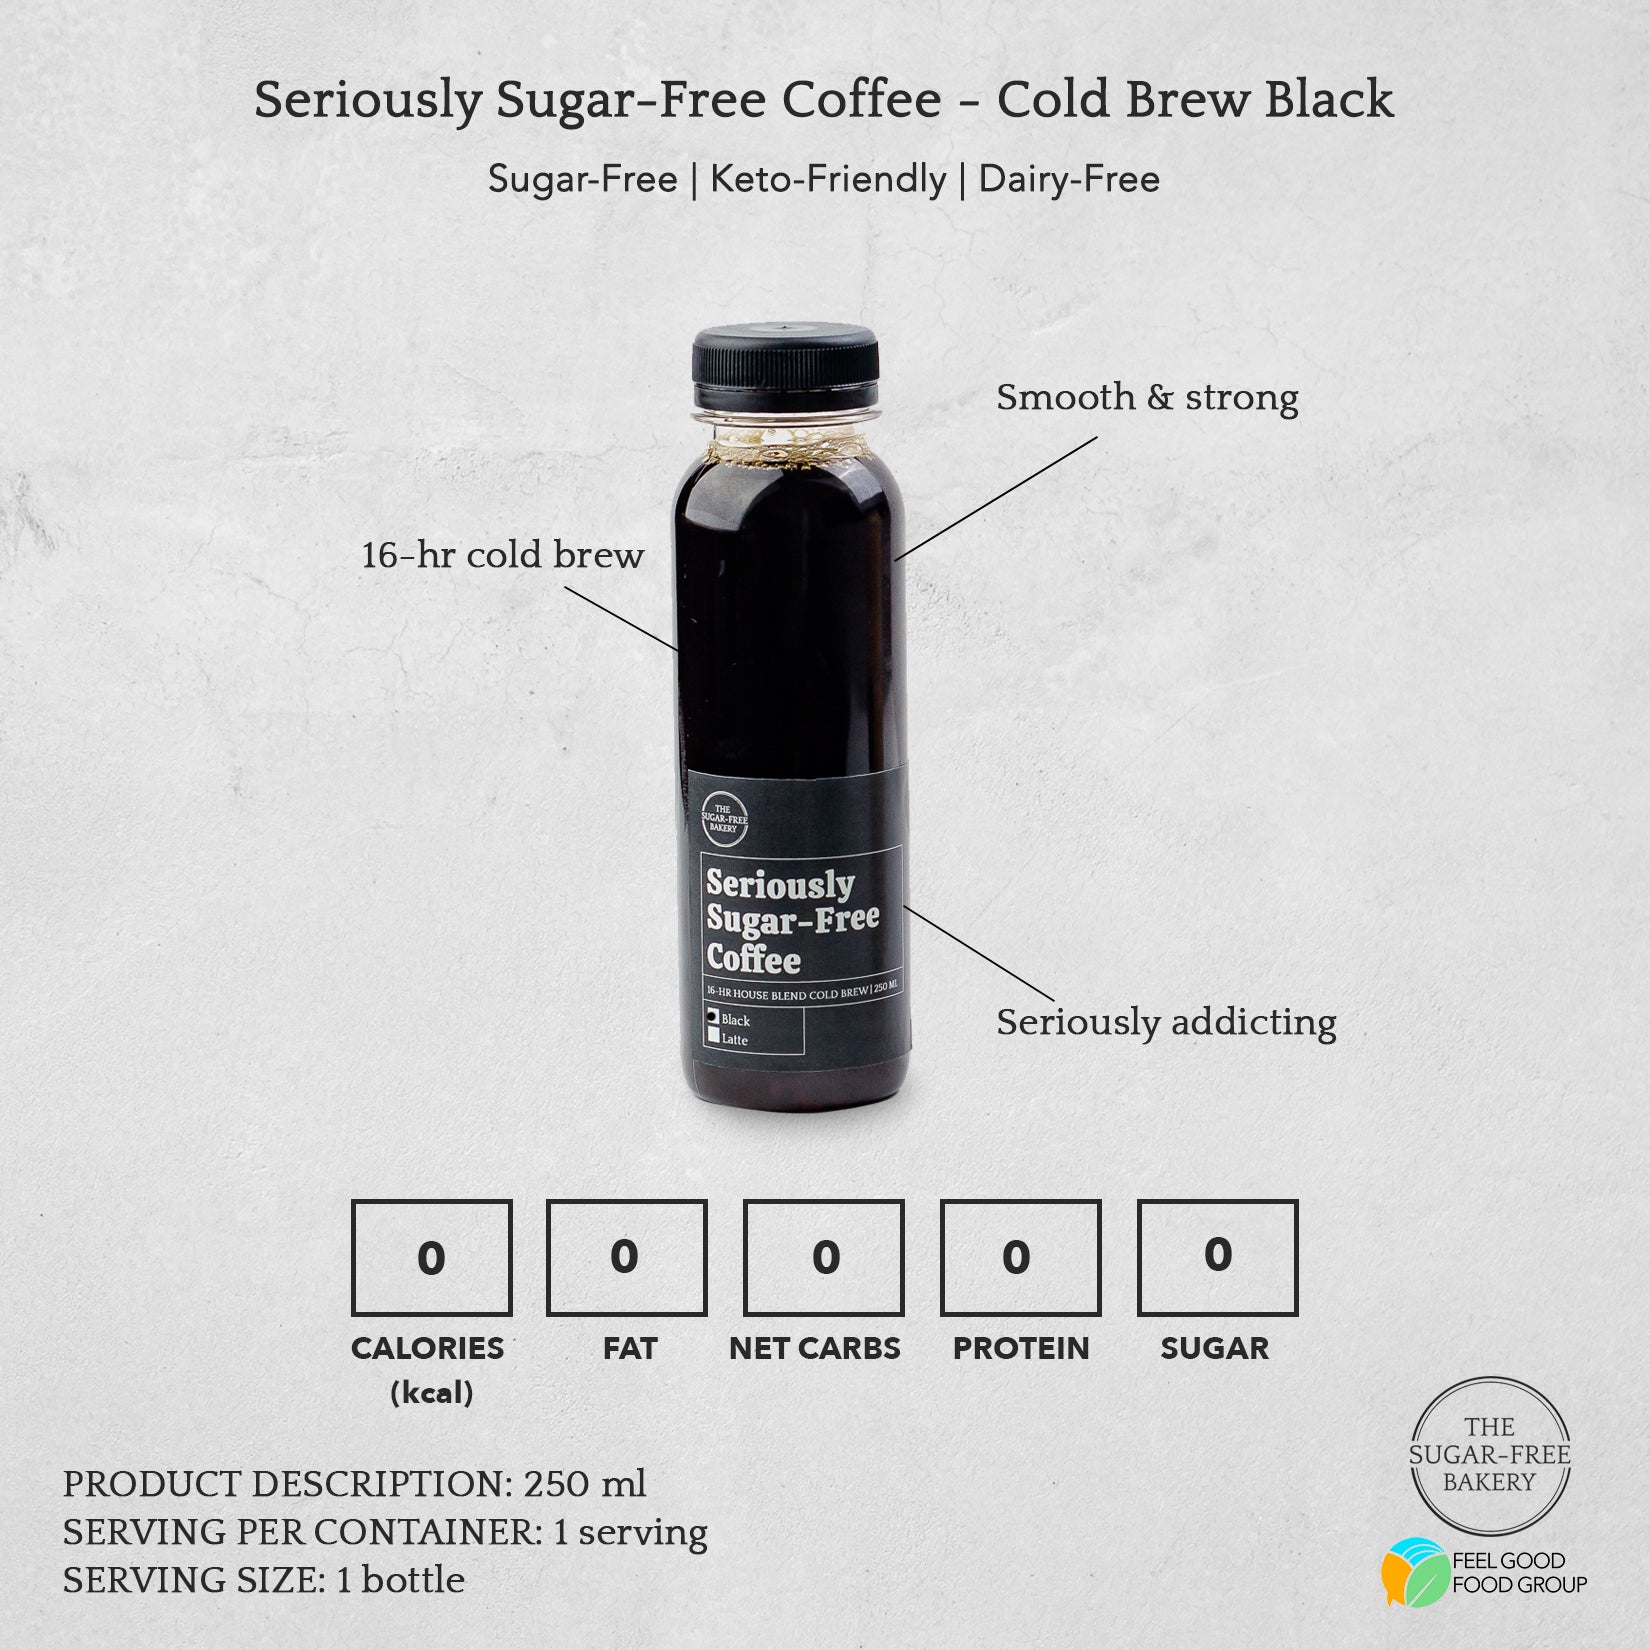 Seriously Sugar-Free Coffee